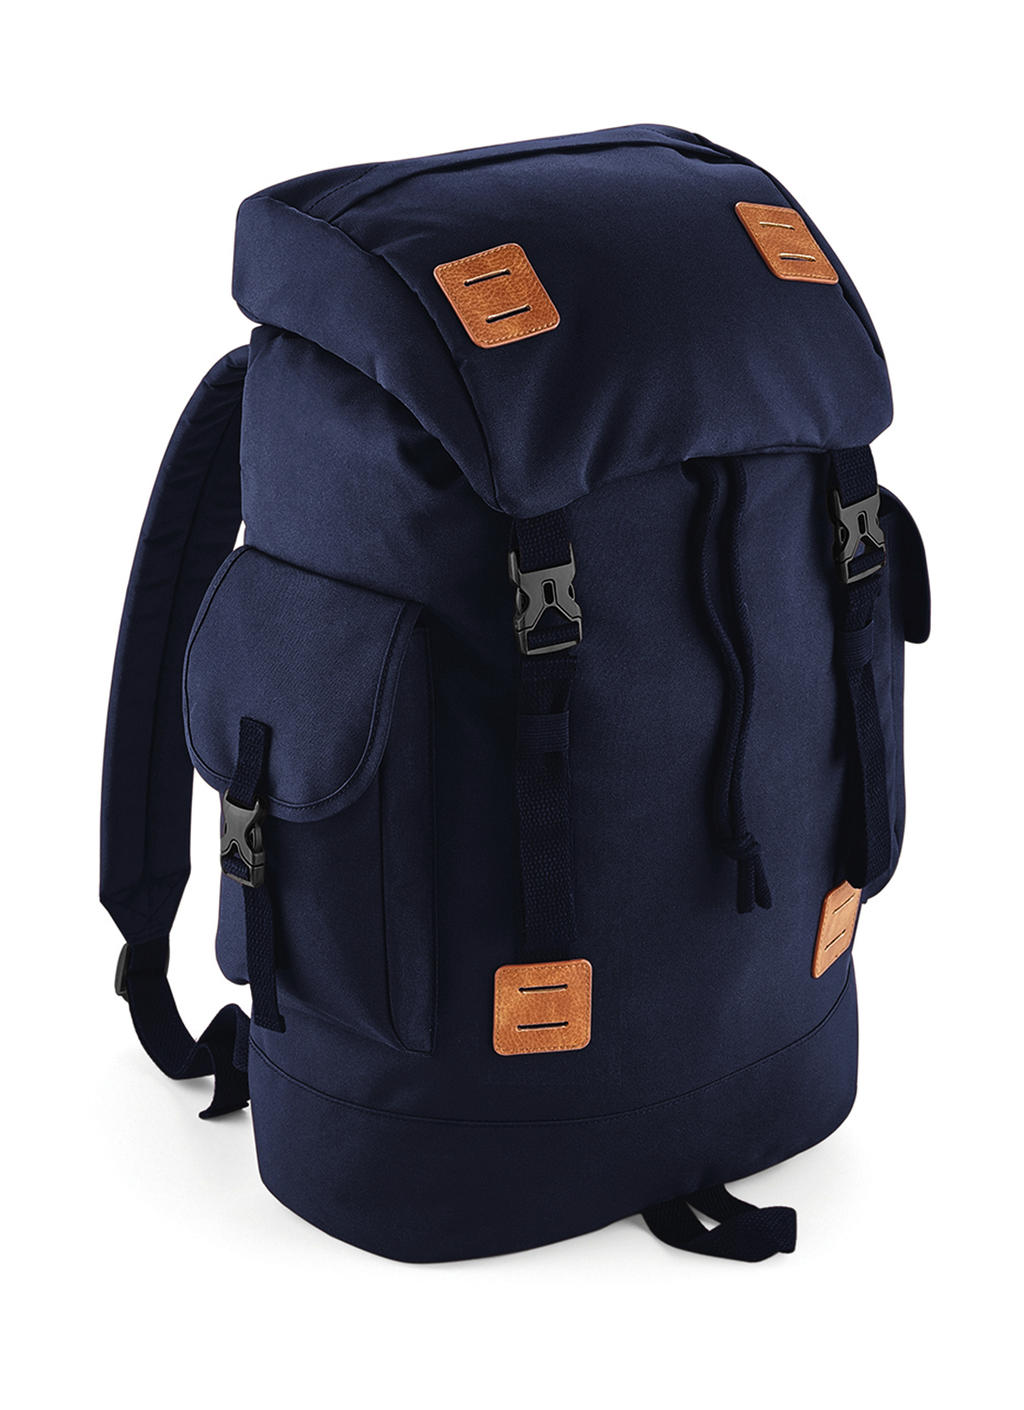  Urban Explorer Backpack in Farbe Navy Dusk/Tan